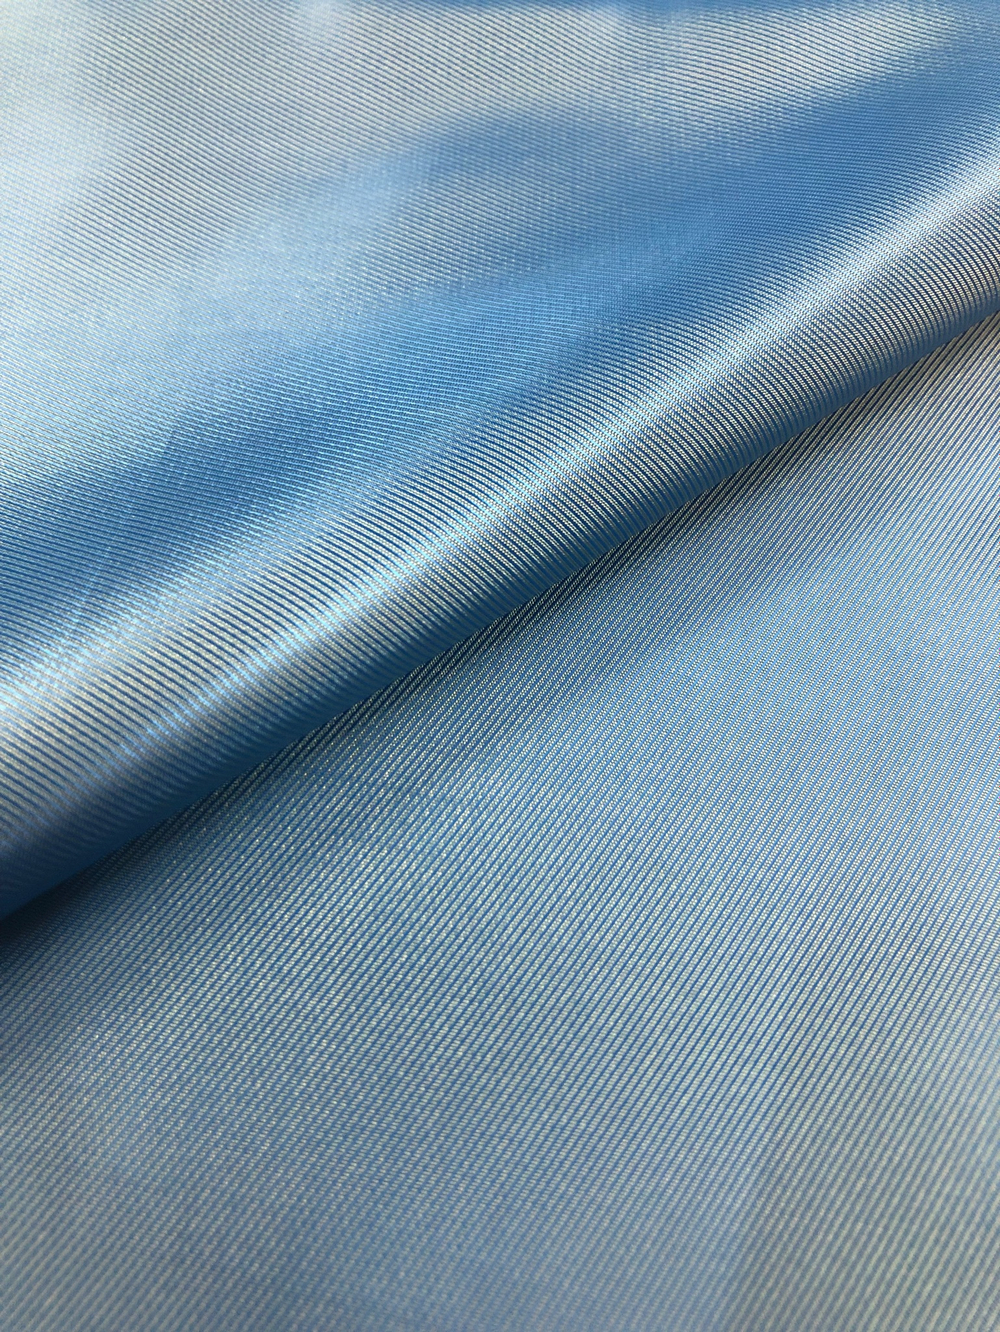 327467 ткань подкладочная цвет голубой (хамелеон), саржа